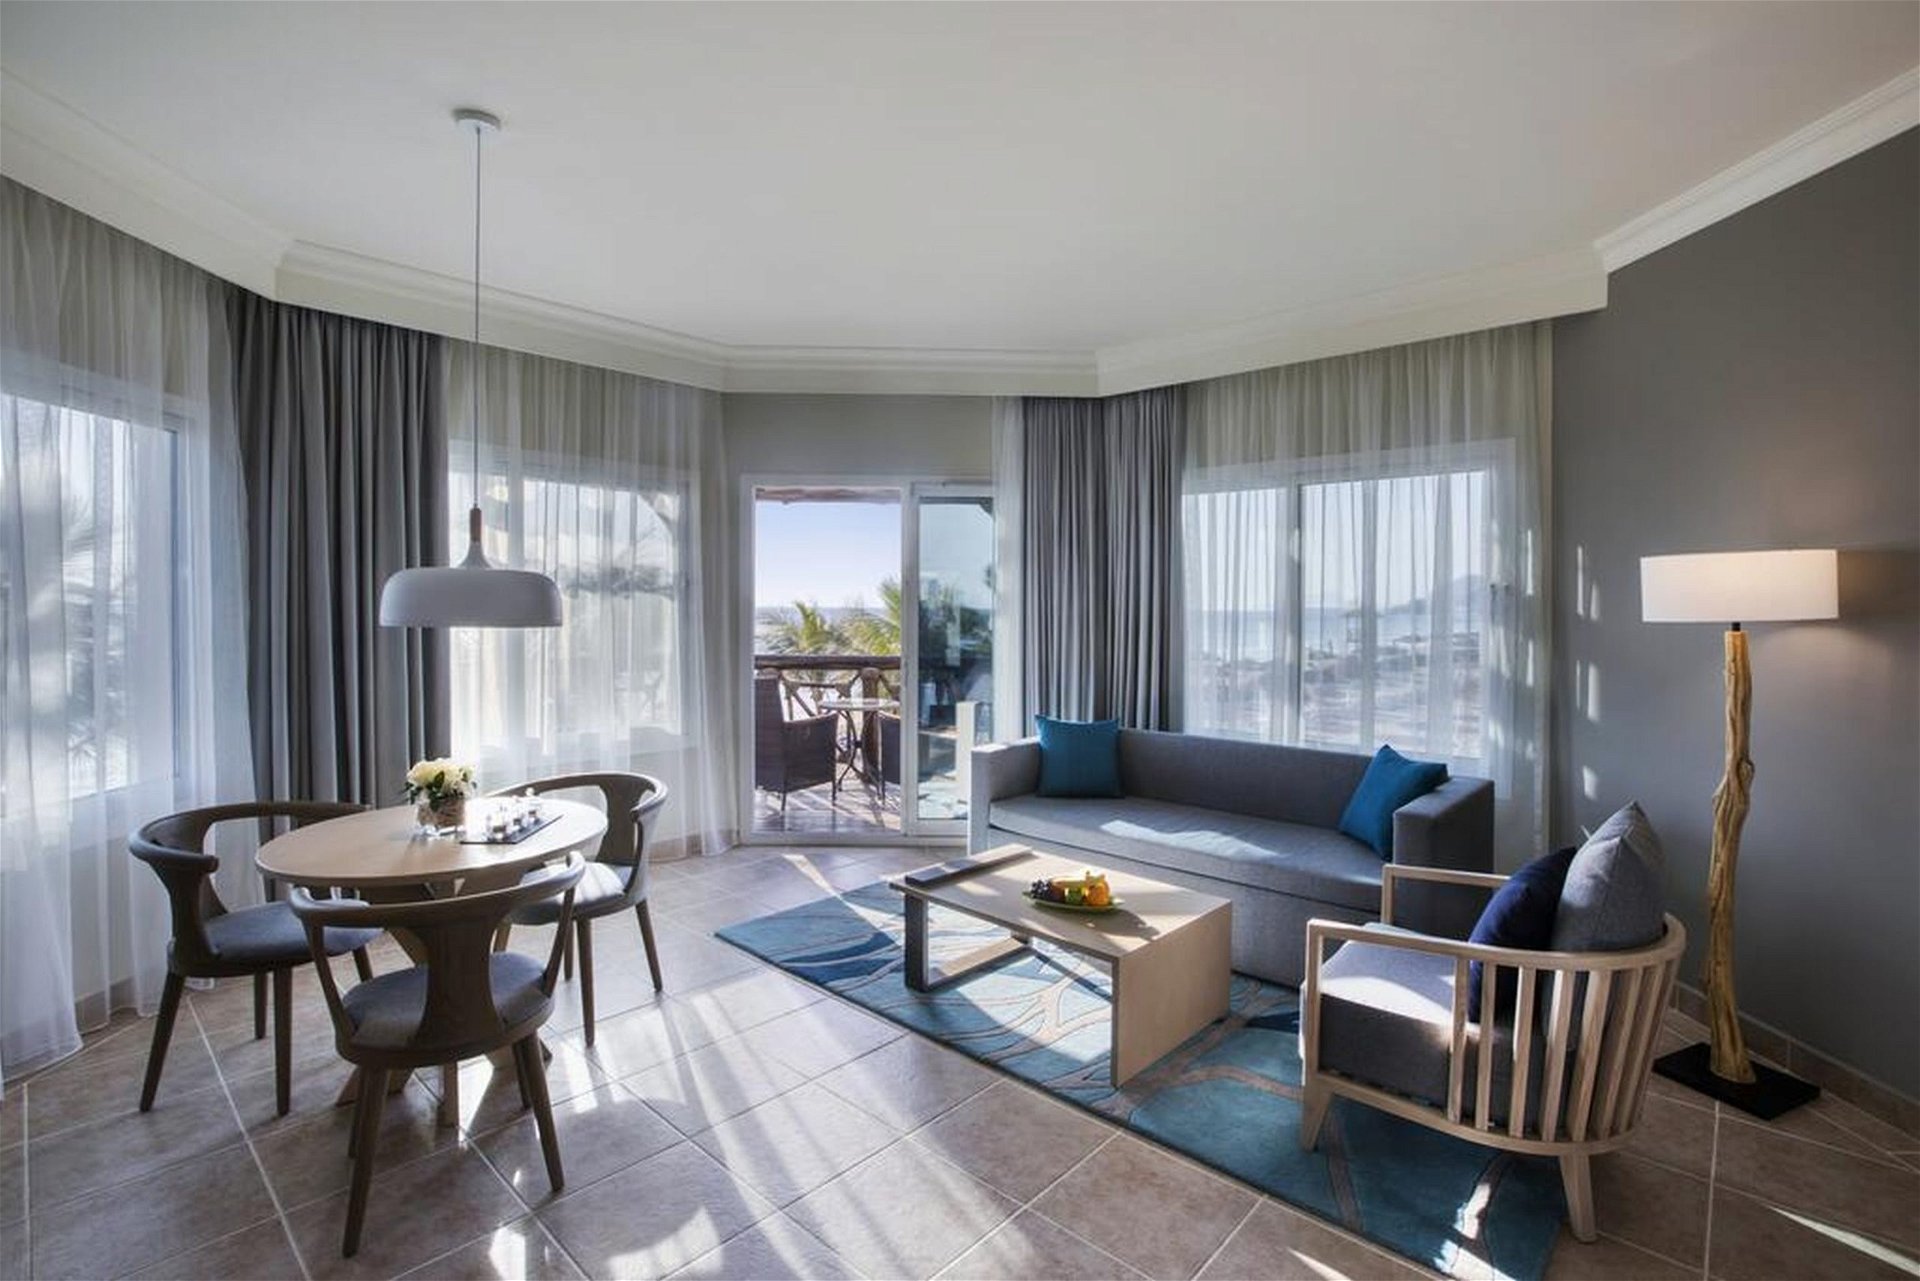 Rotana Resort and Spa, Fujairah - Hotel Interior Design on Love That Design